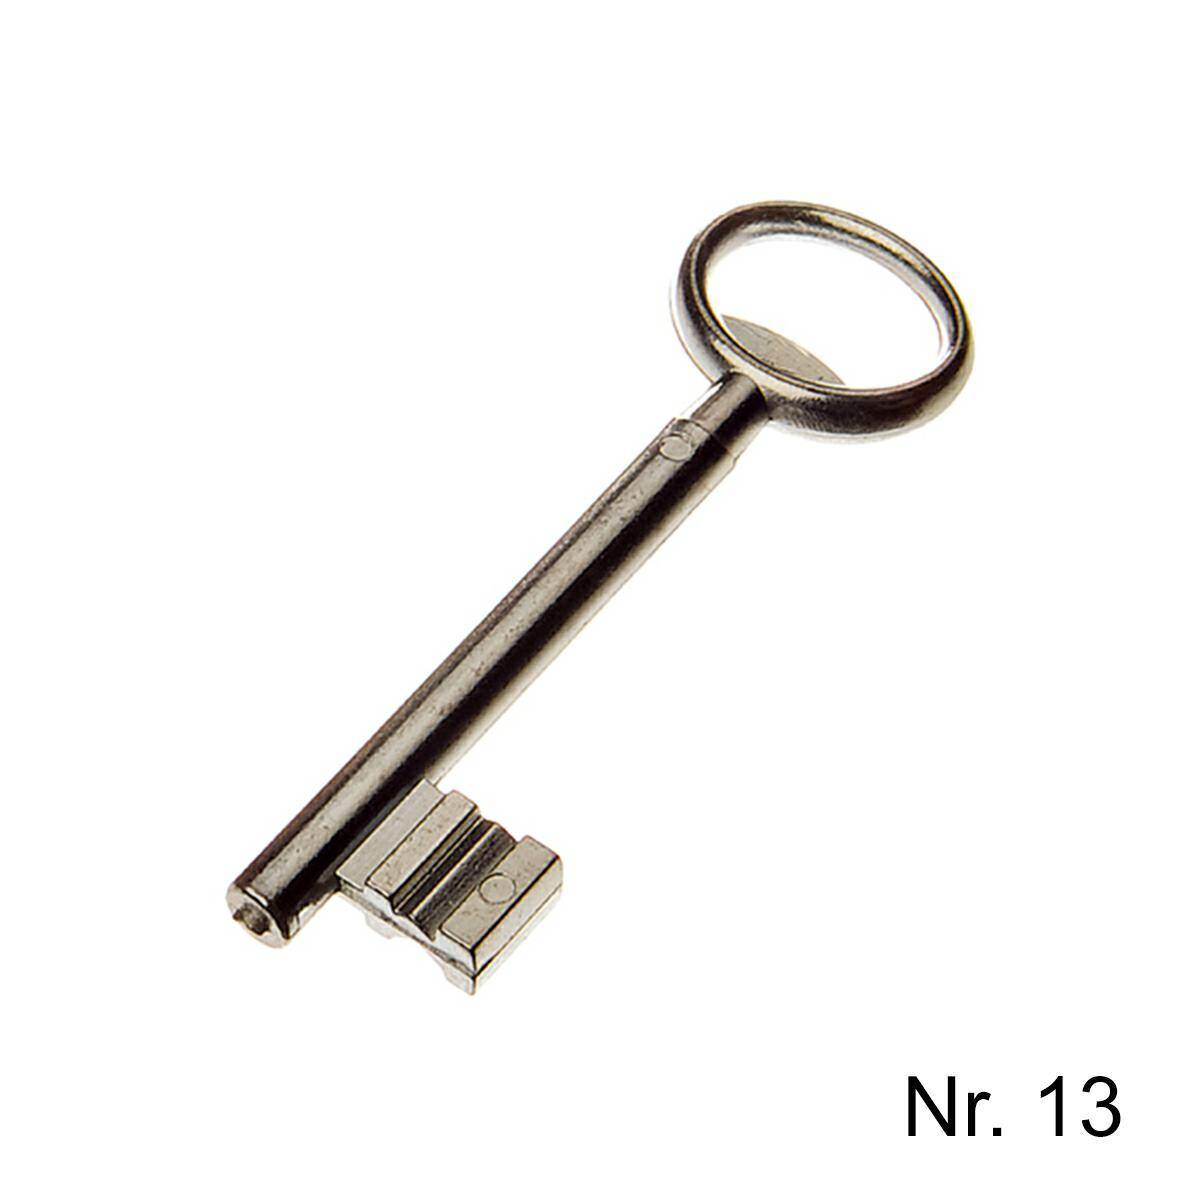 Cast key Jania for the lock - No. 13